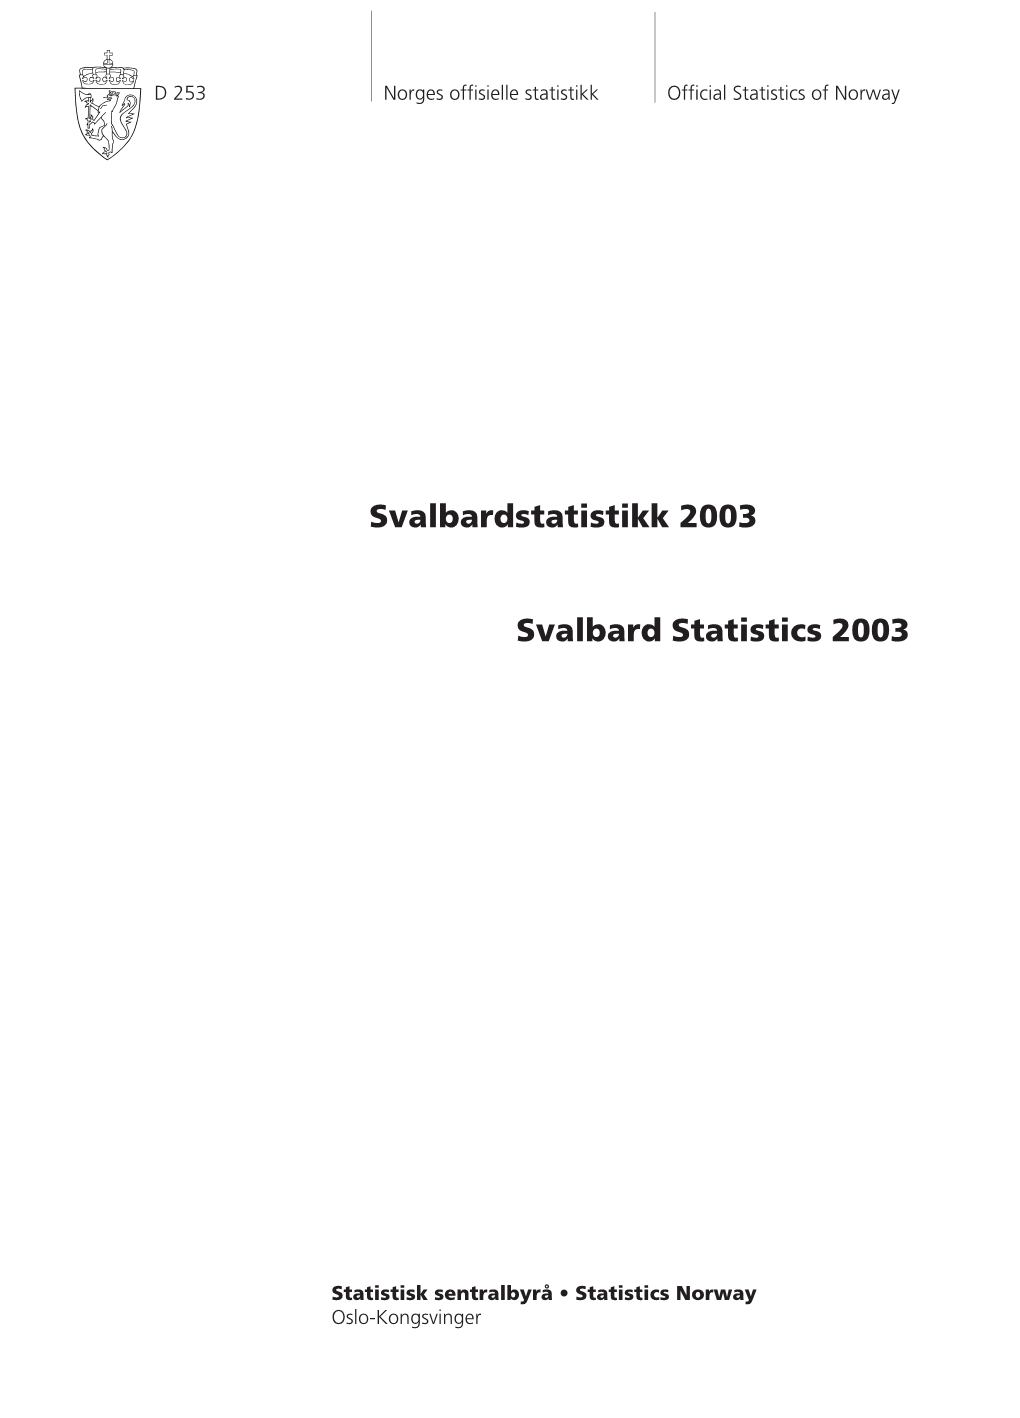 Svalbardstatistikk 2003 Svalbard Statistics 2003